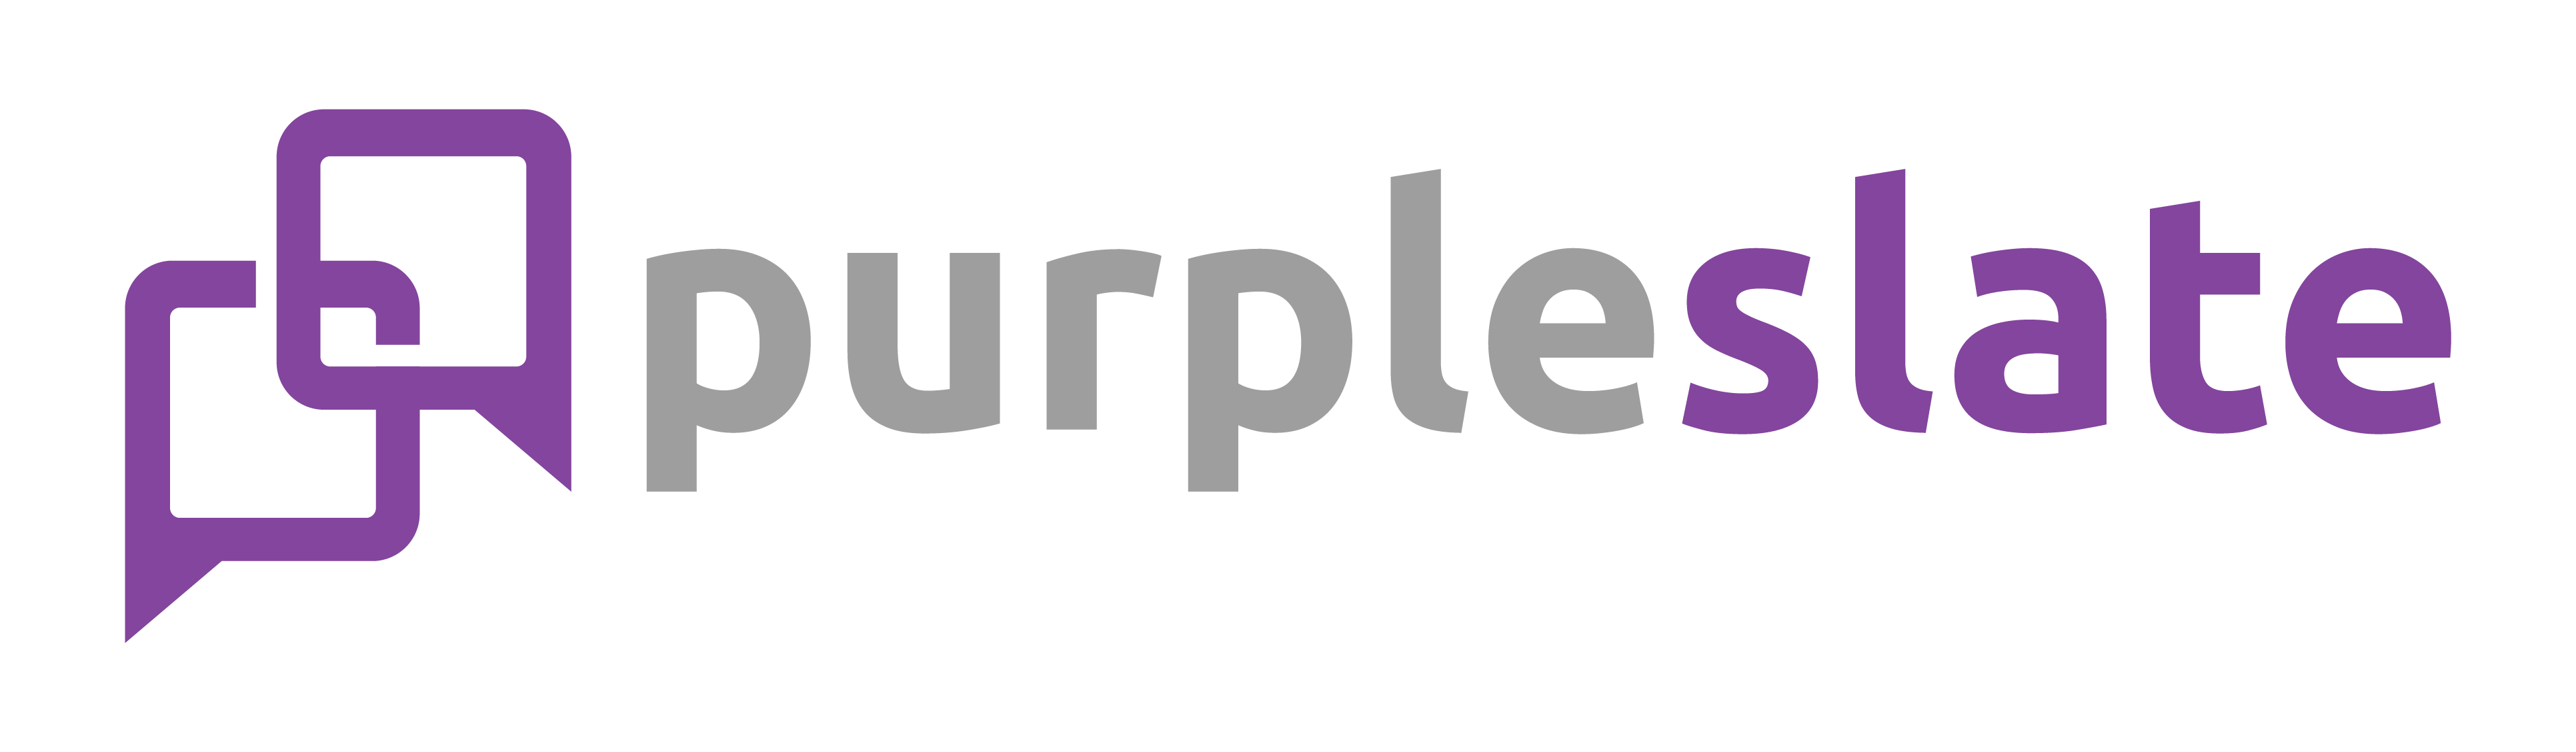 purpleSlate